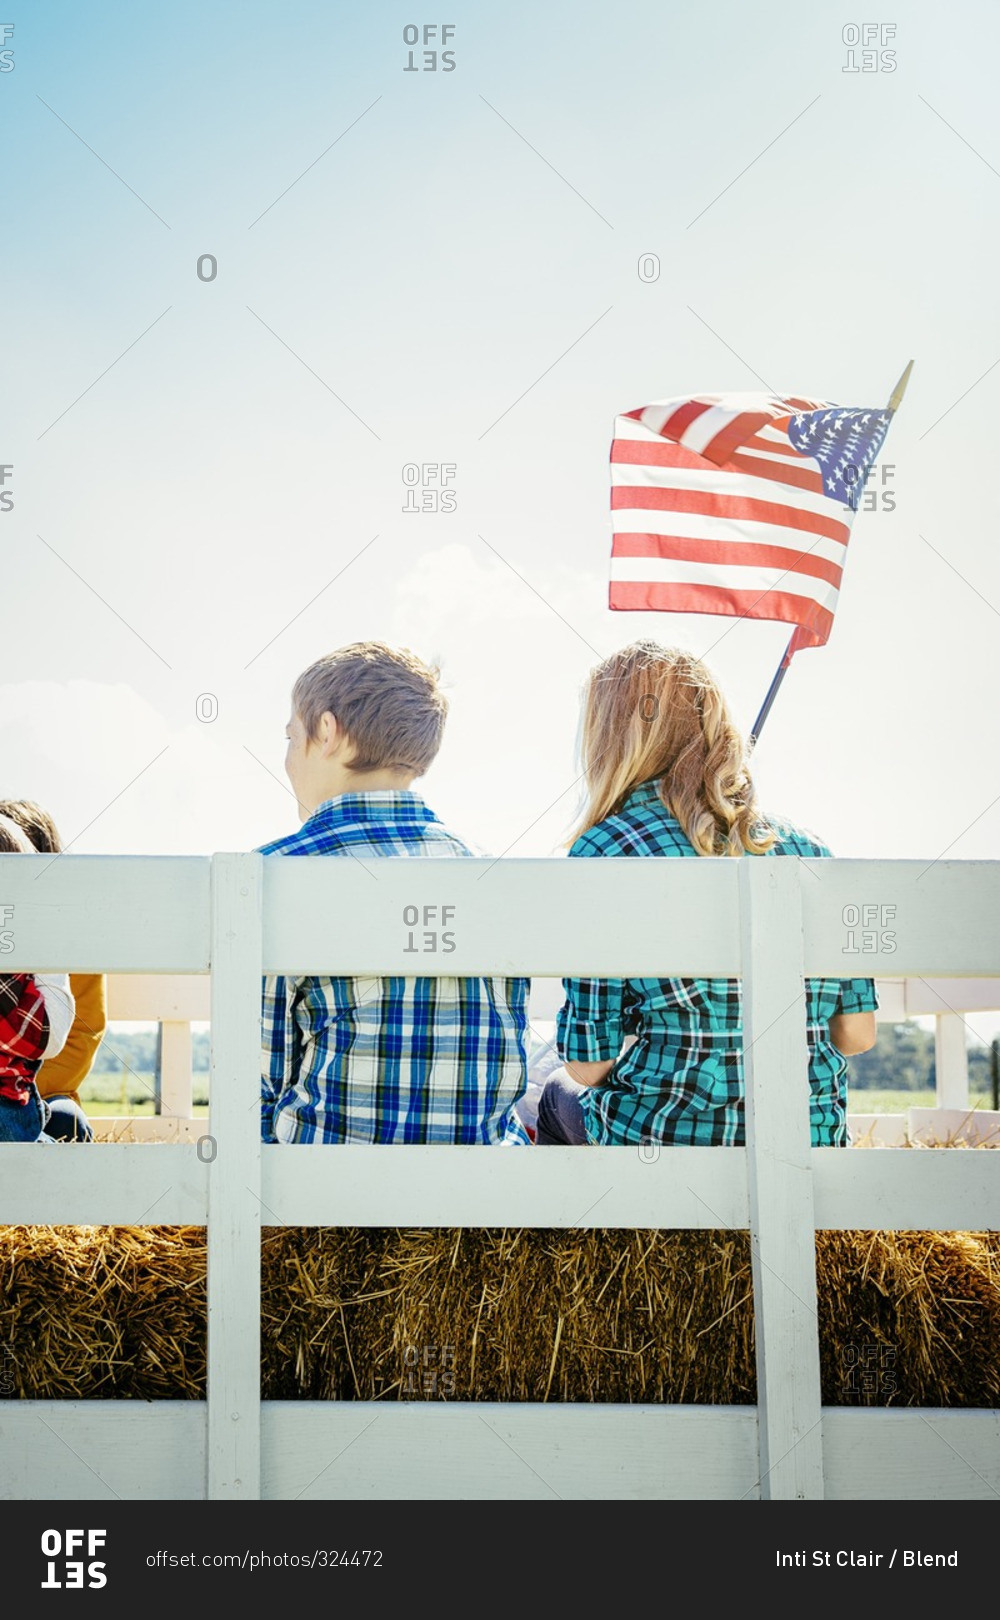 Children waving American flag on hay ride